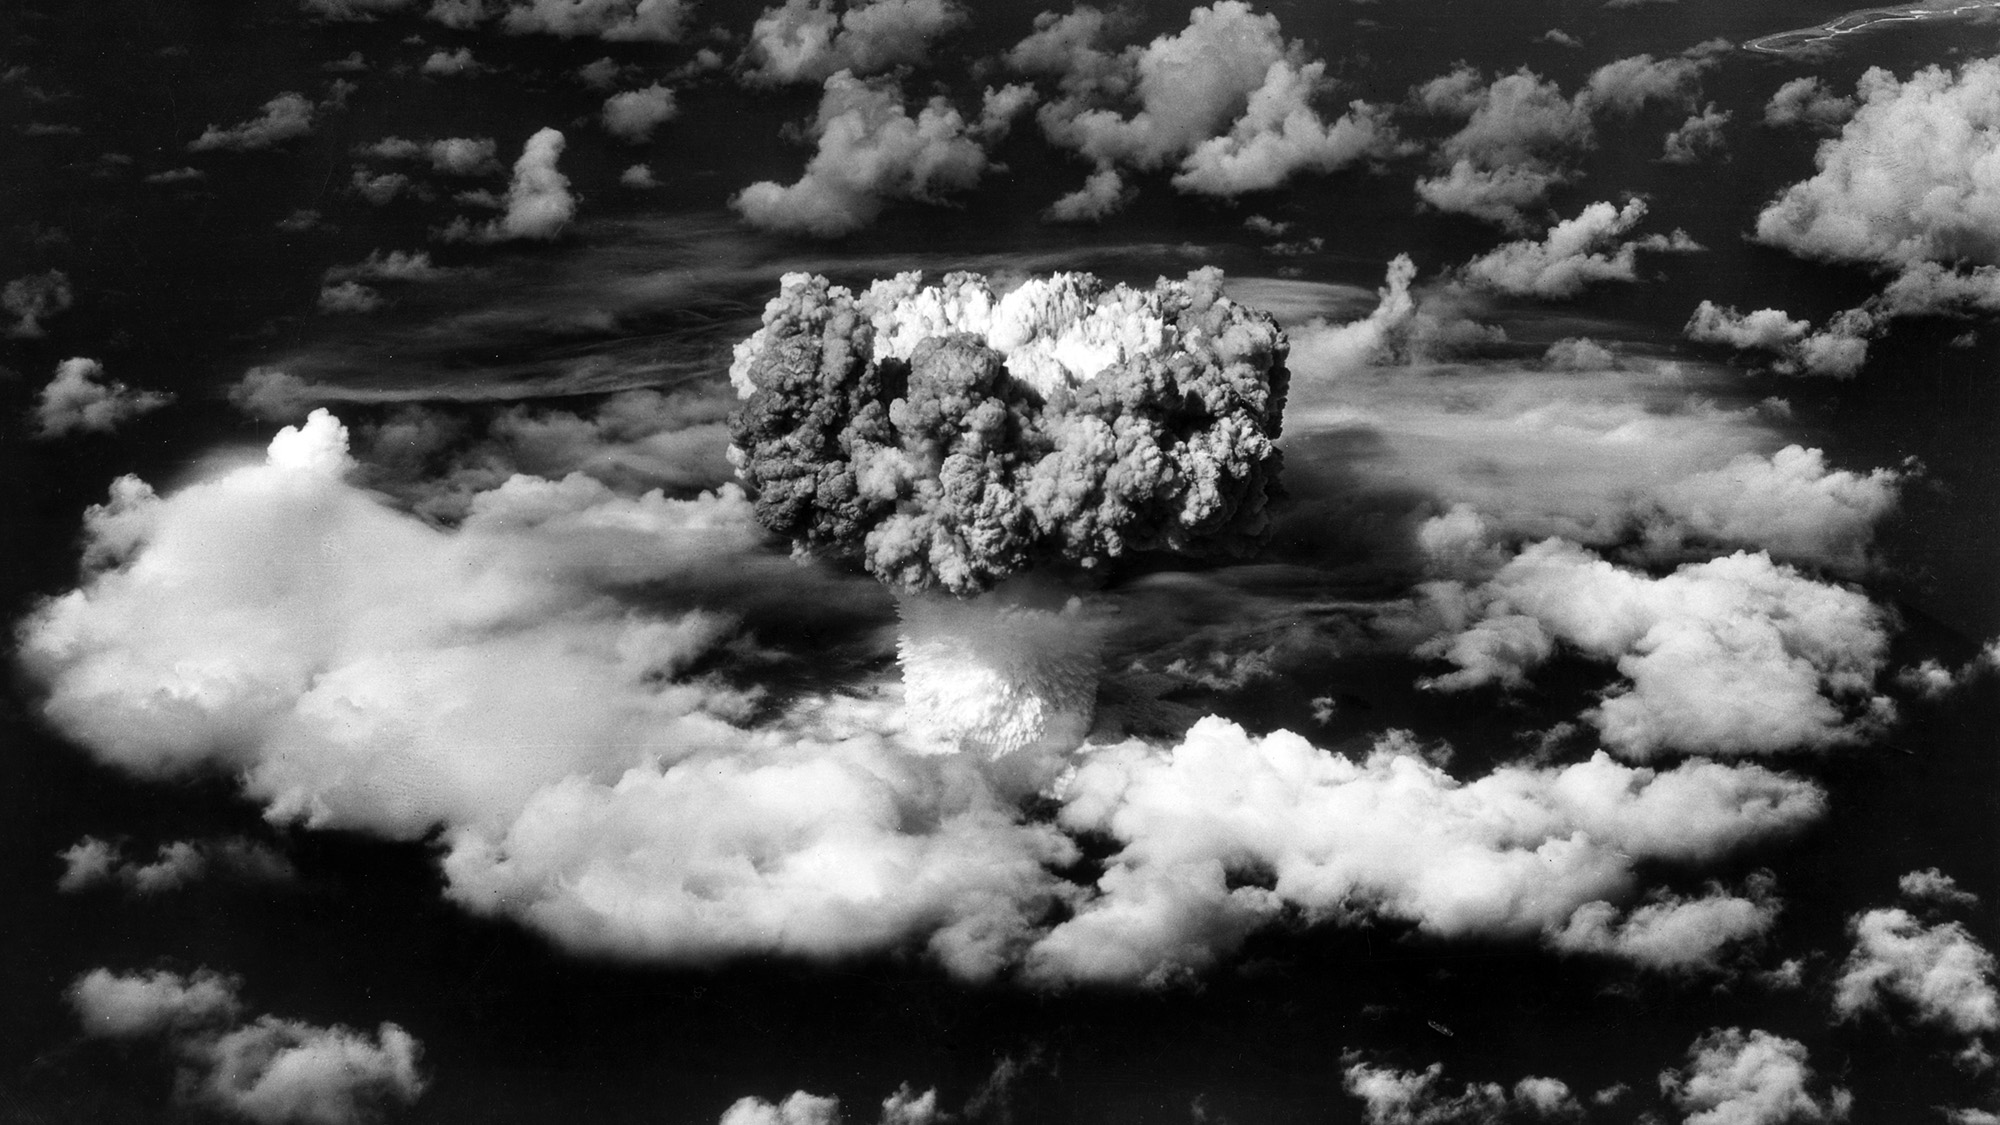 A mushroom cloud rises from the underwater atom bomb test 'Baker' in&nbsp;1946.&nbsp;